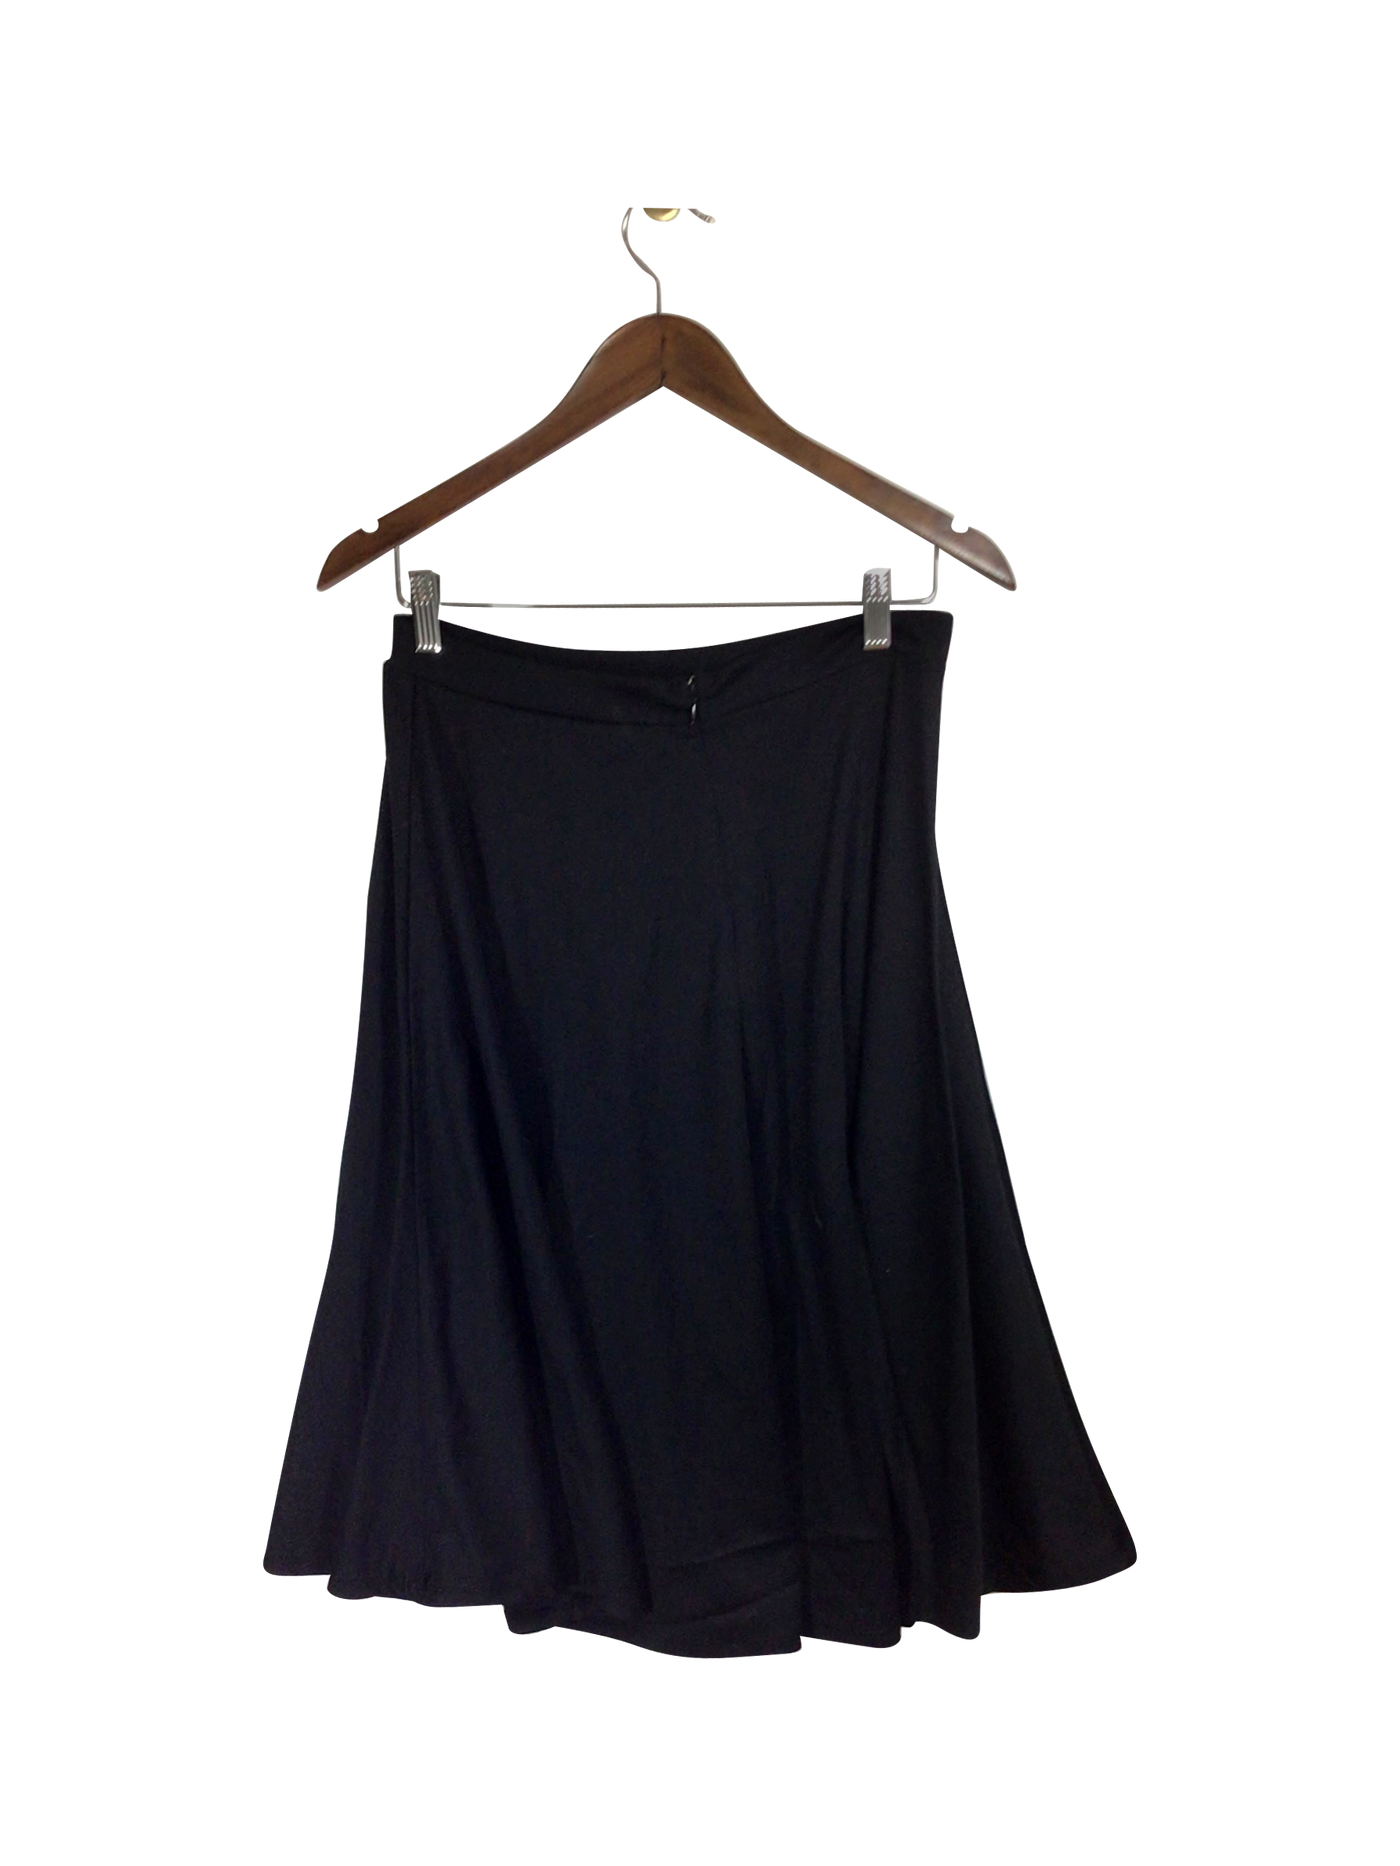 GW Regular fit Skirt in Black - Size S | 15 $ KOOP